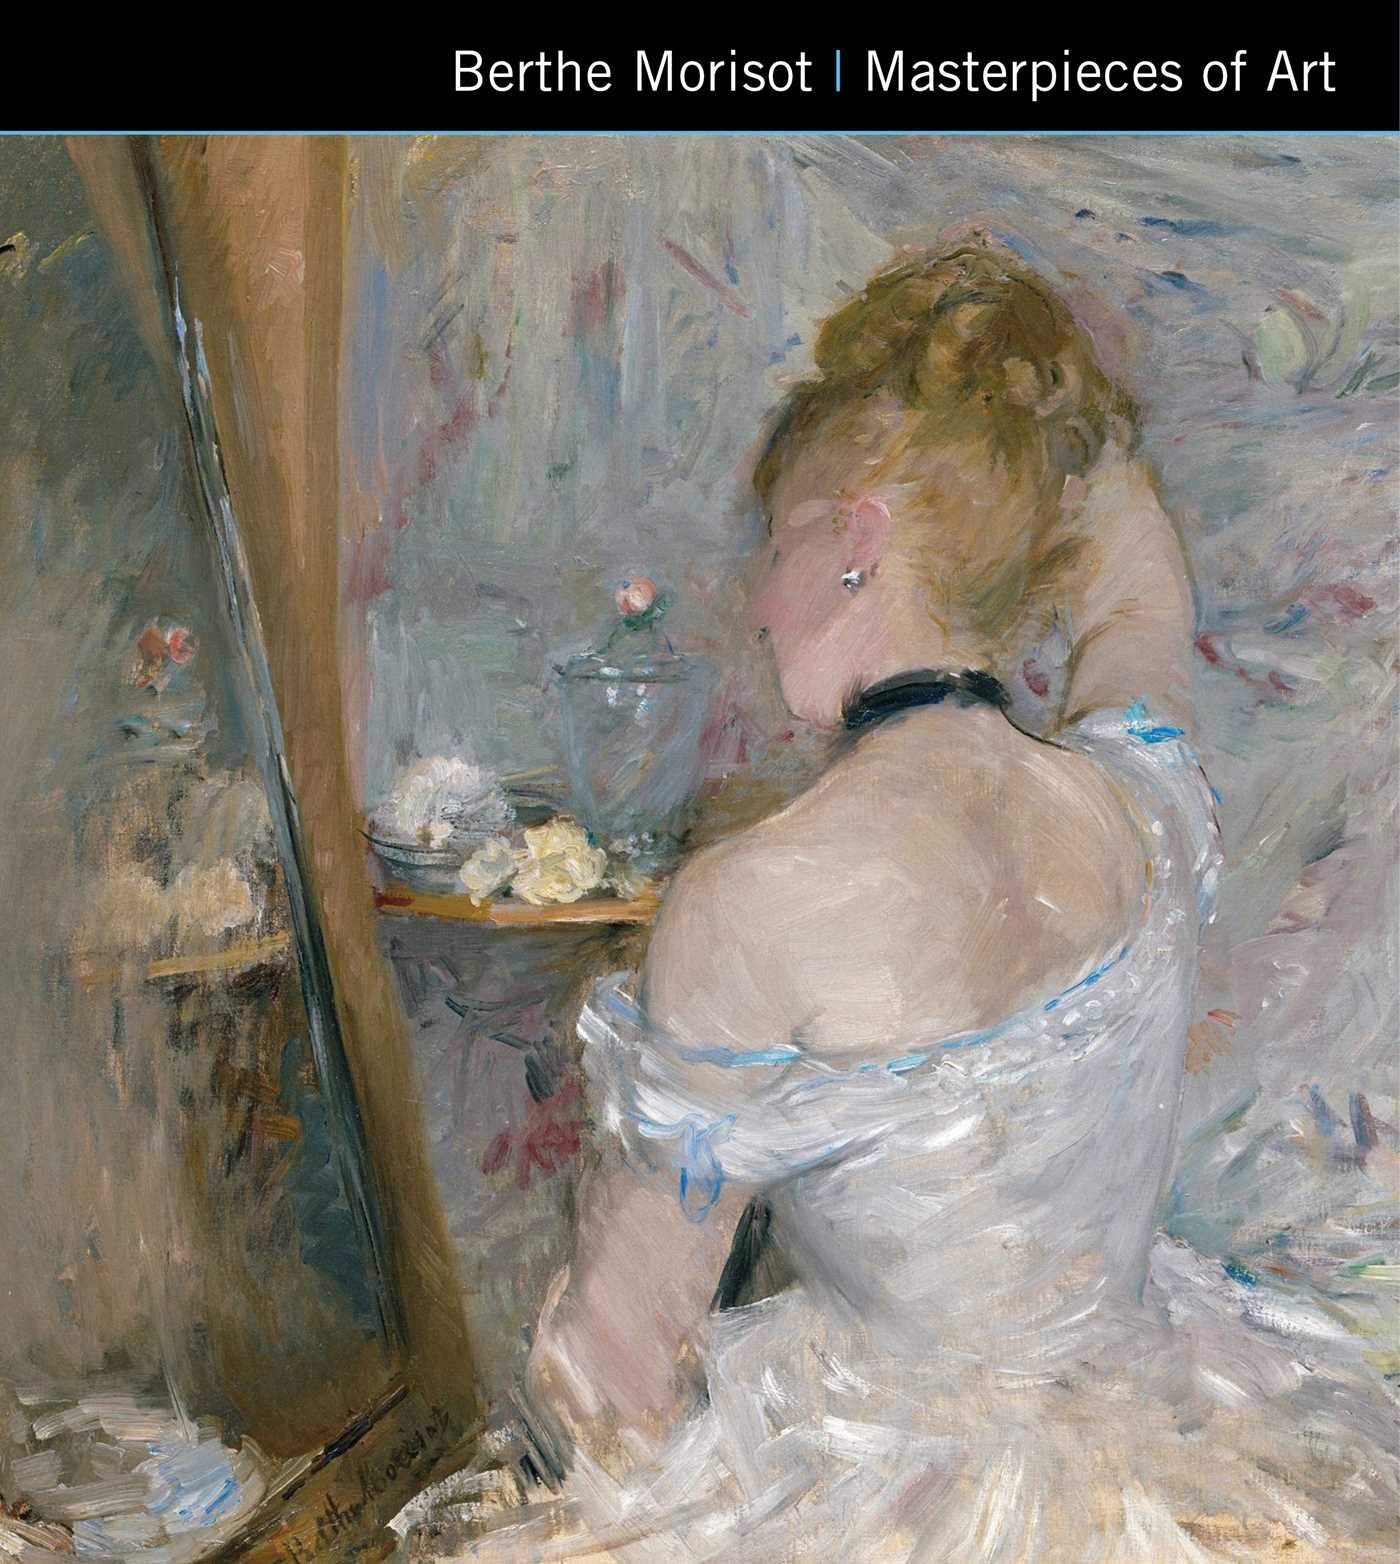 Berthe Morisot - Masterpieces of Art